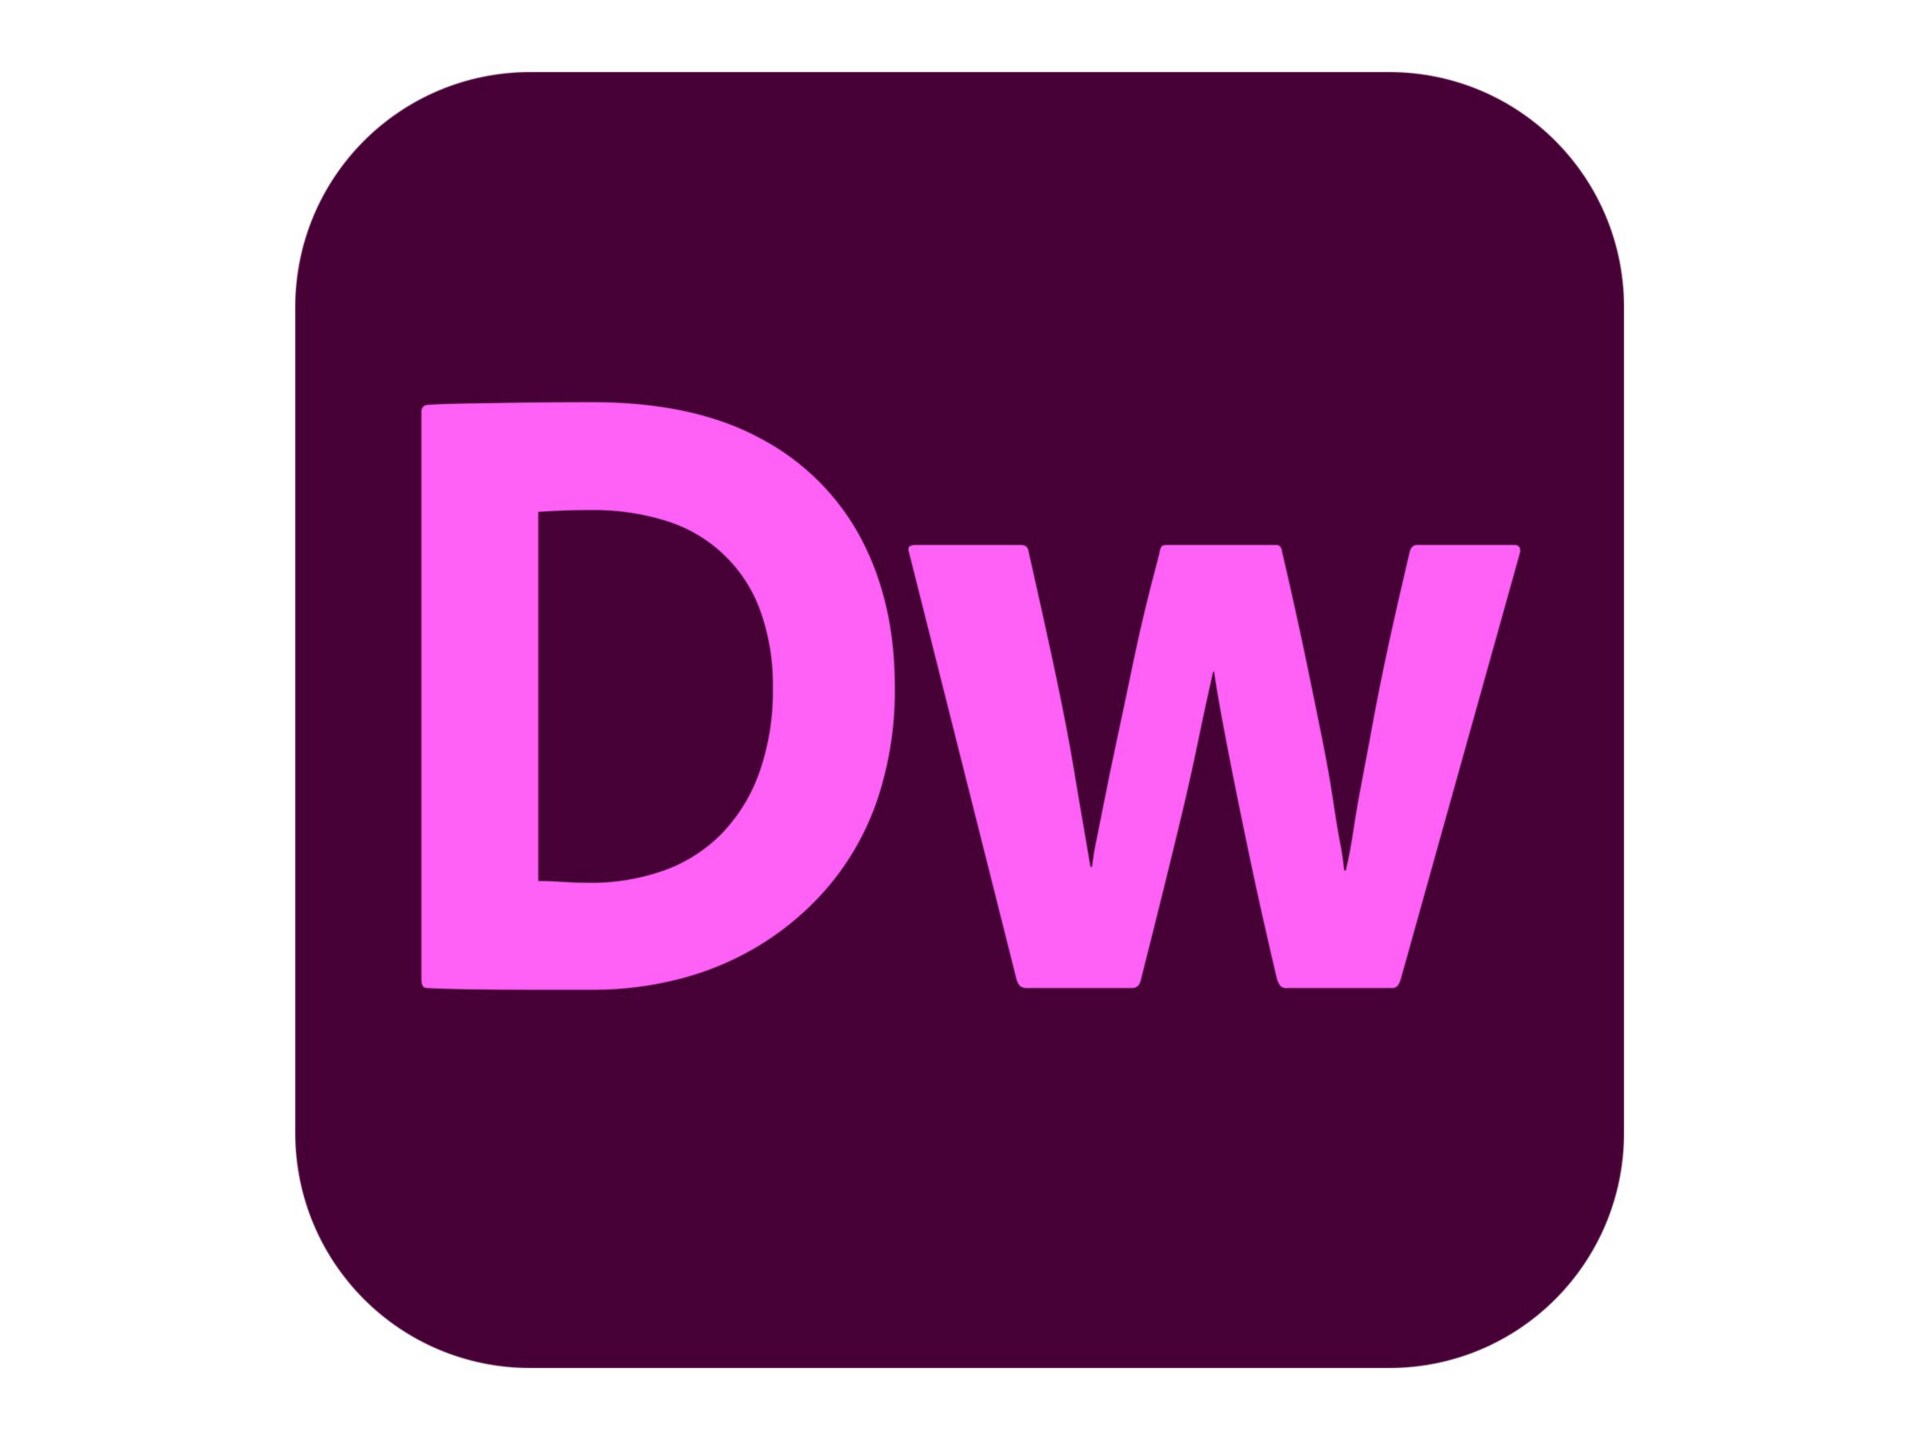 Adobe Dreamweaver CC - Team Licensing Subscription New (11 months) - 1 user